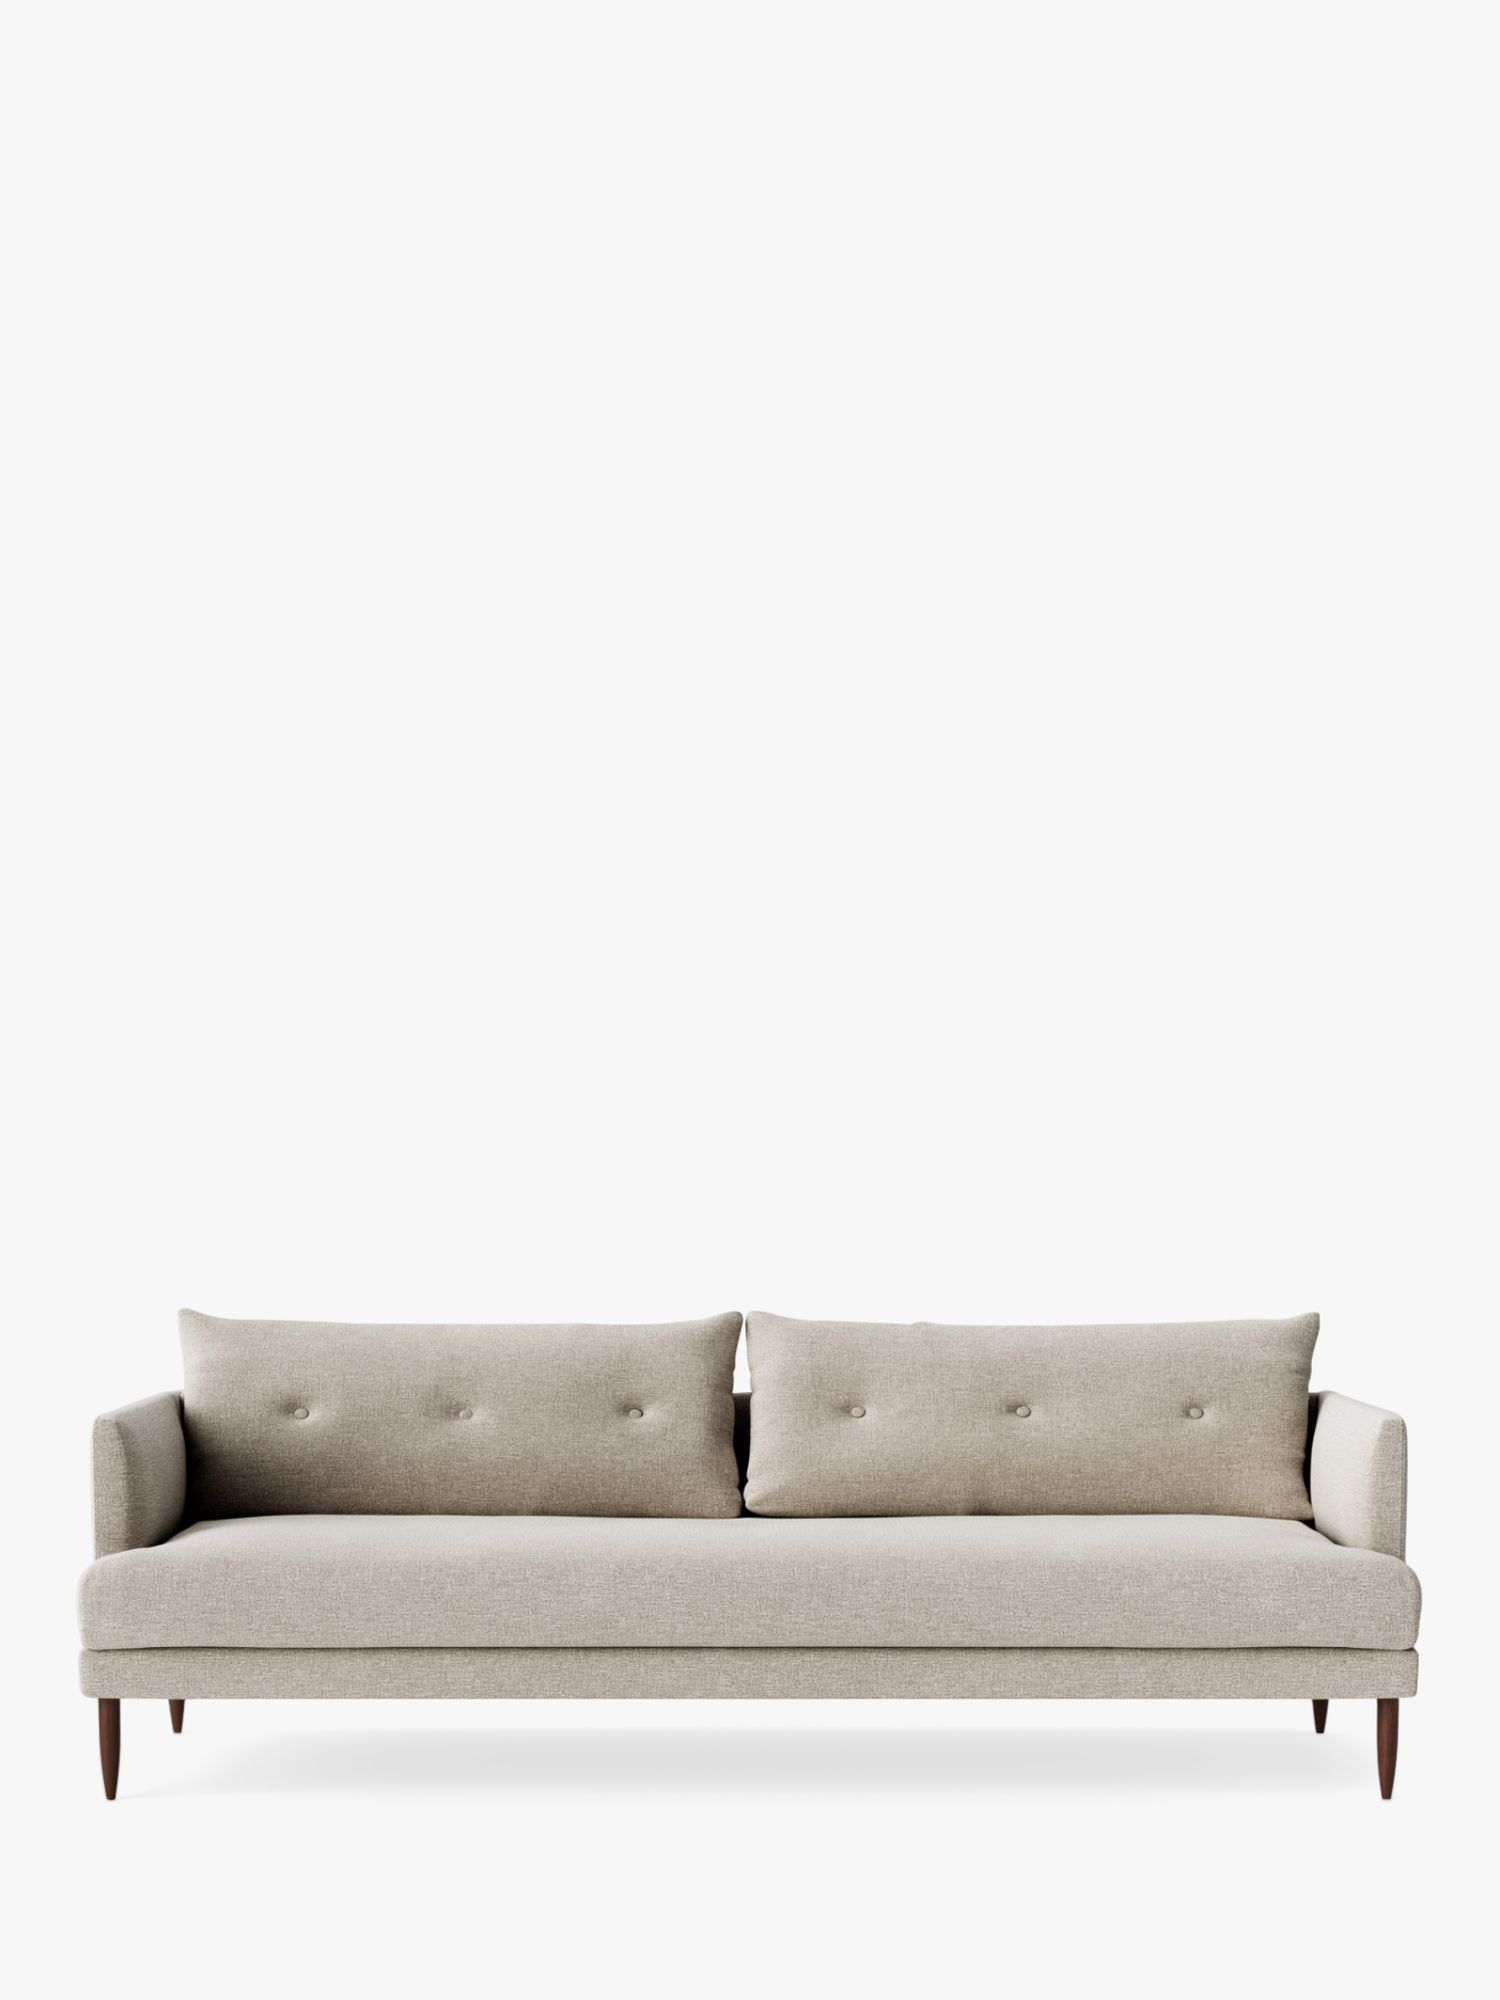 Kalmar Range, Swoon Kalmar Large 3 Seater Sofa, Dark Leg, House Weave Chalk